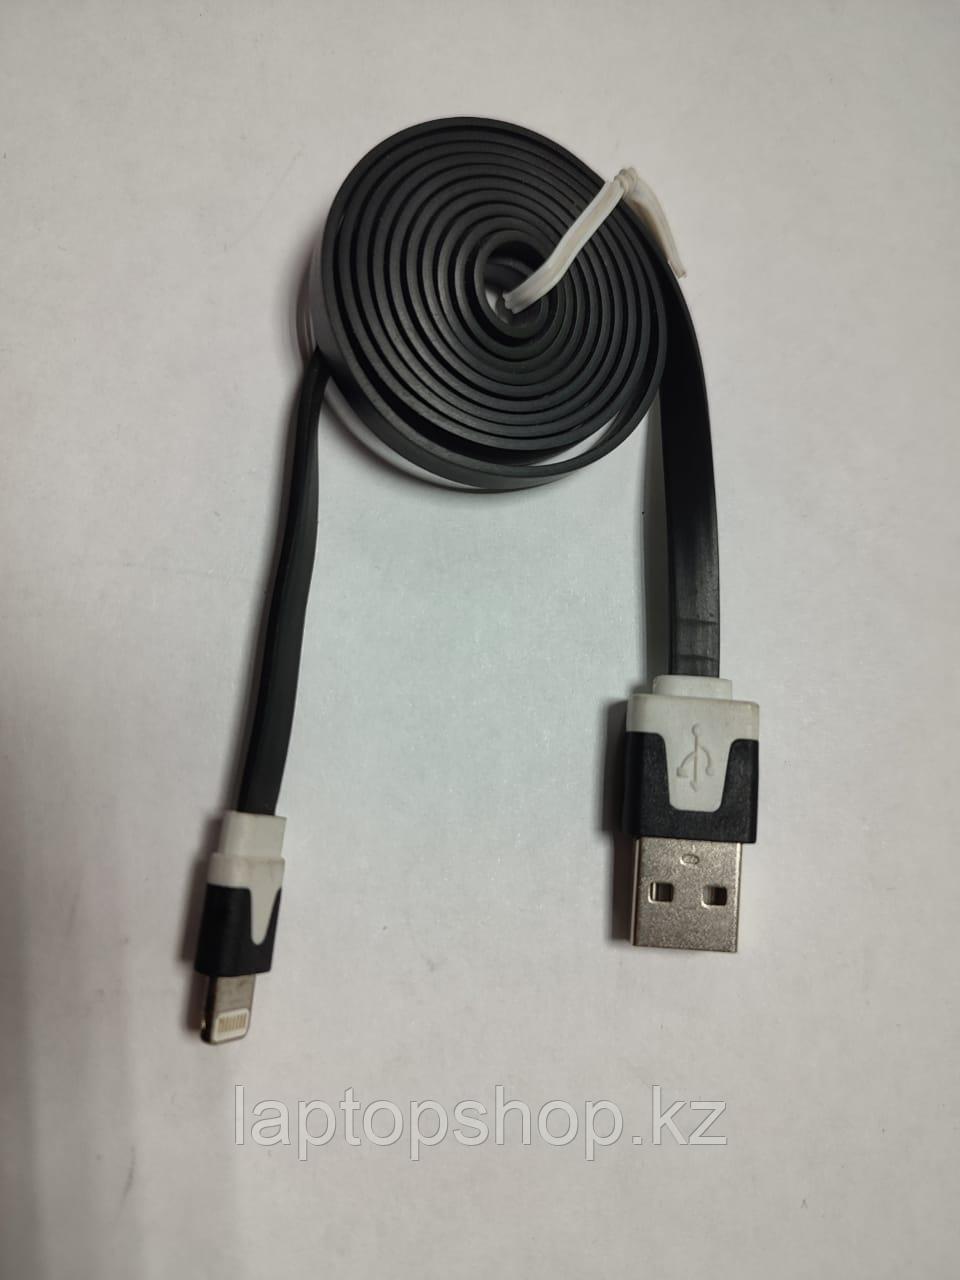 Интерфейсный кабель для зарядки USB Data Sync Charger Cable for Apple iPad 4 Mini Air, Black, фото 1